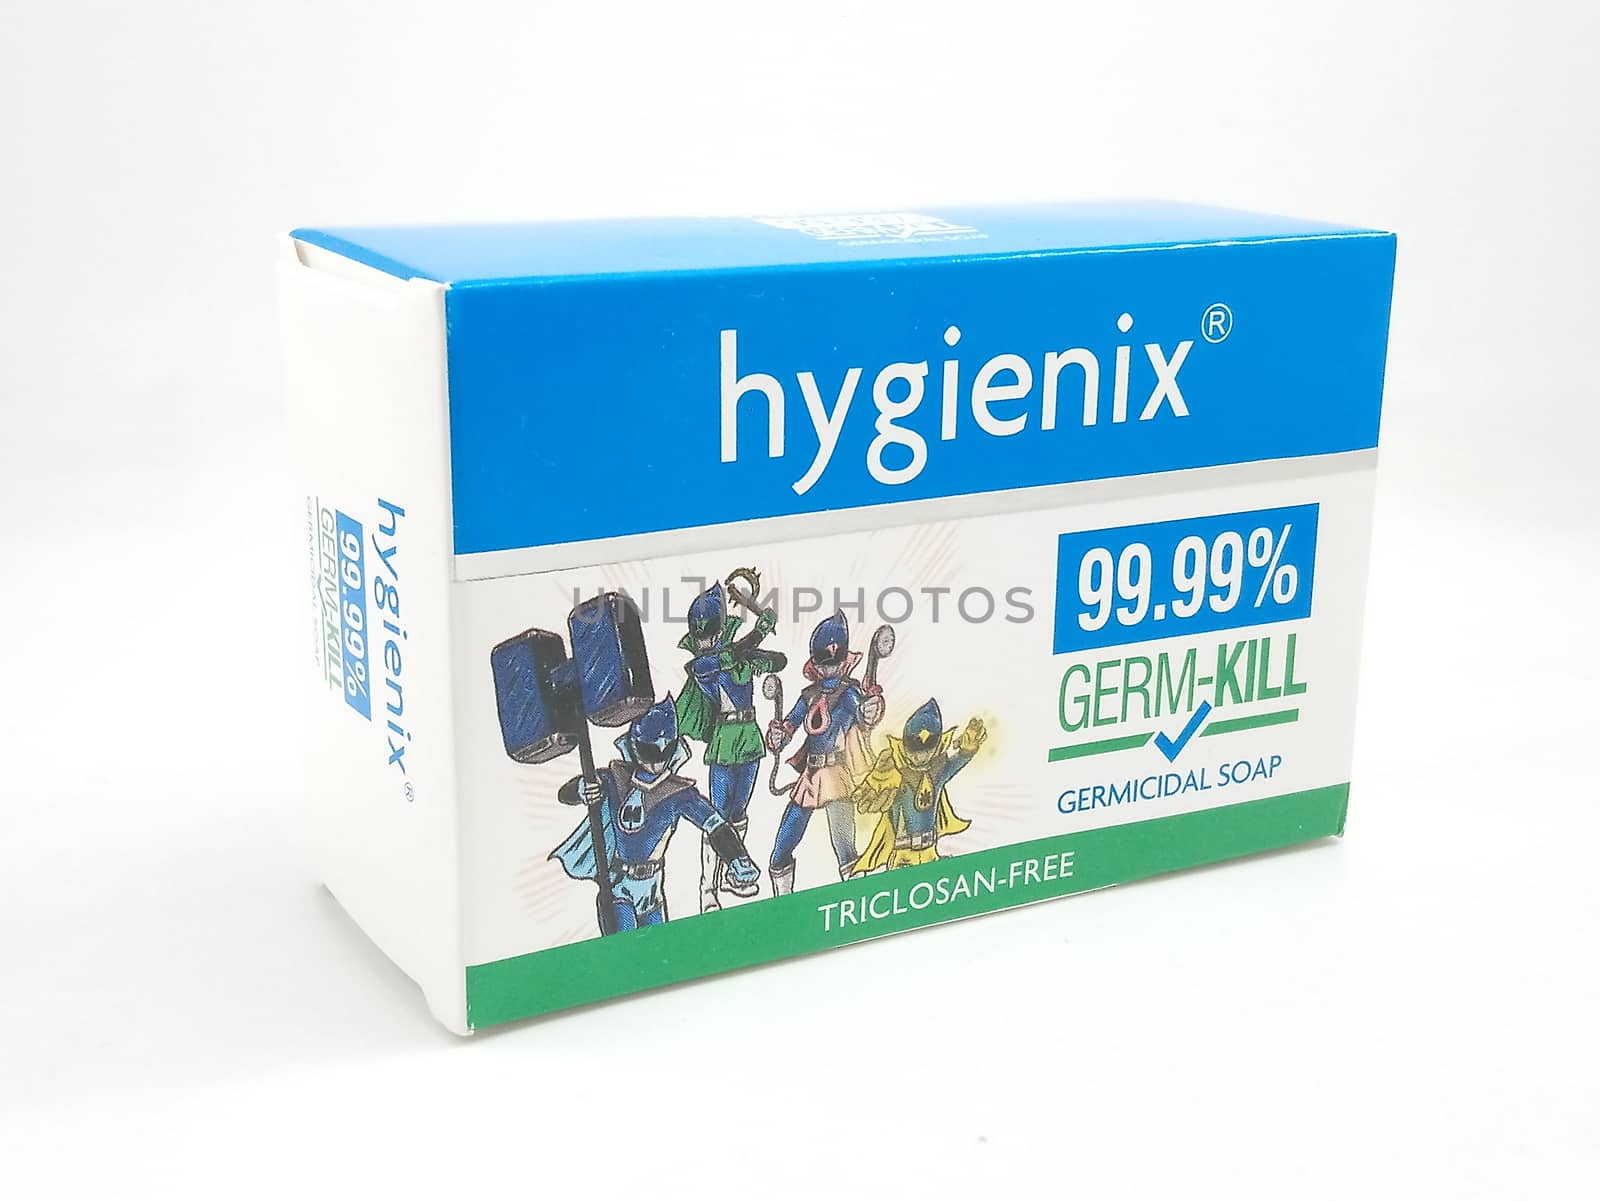 Hygienix germicidal soap in Manila, Philippines by imwaltersy